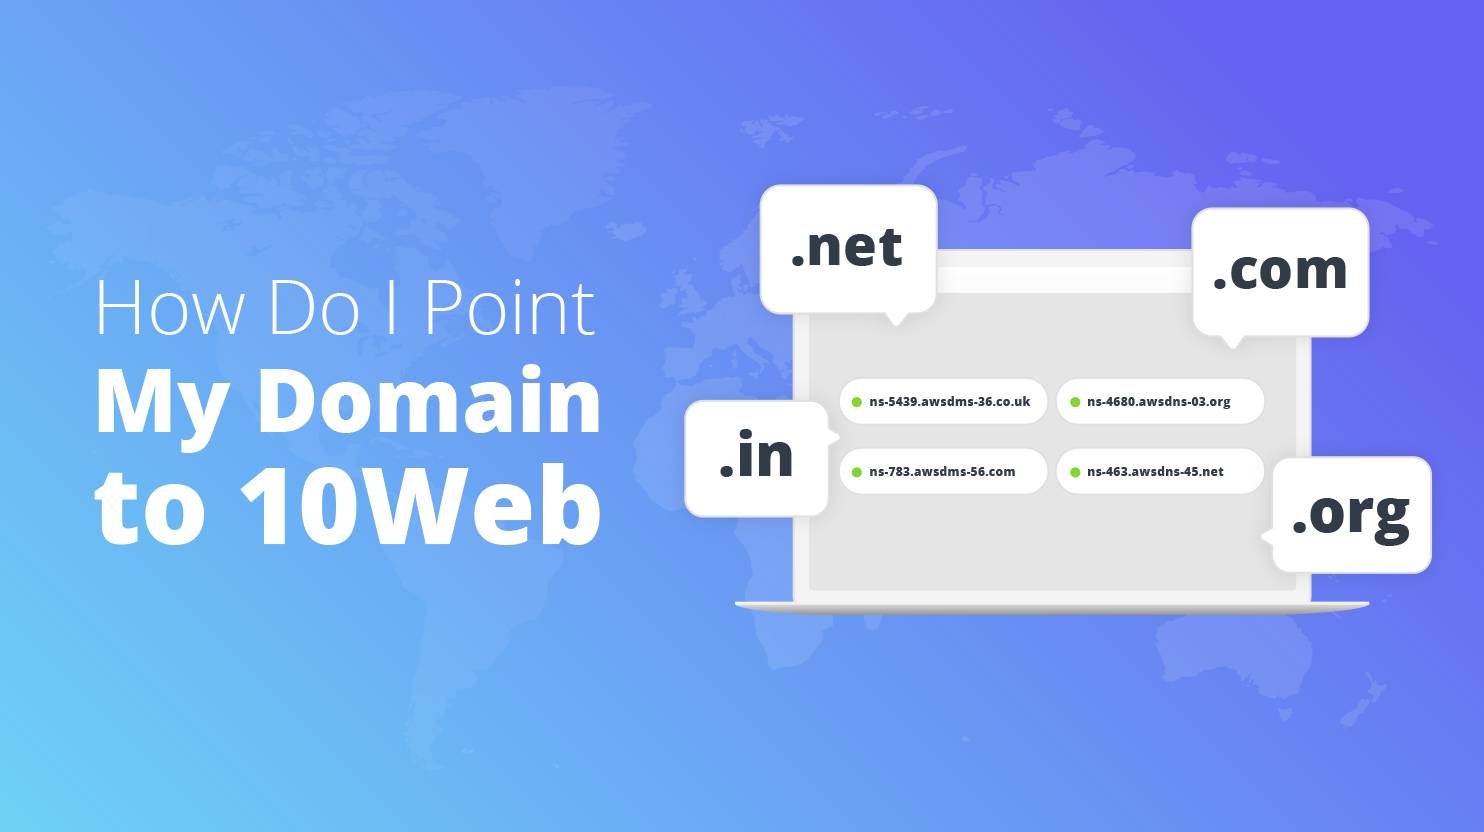 dow-do-i-point-domain-dns-10web-hosting